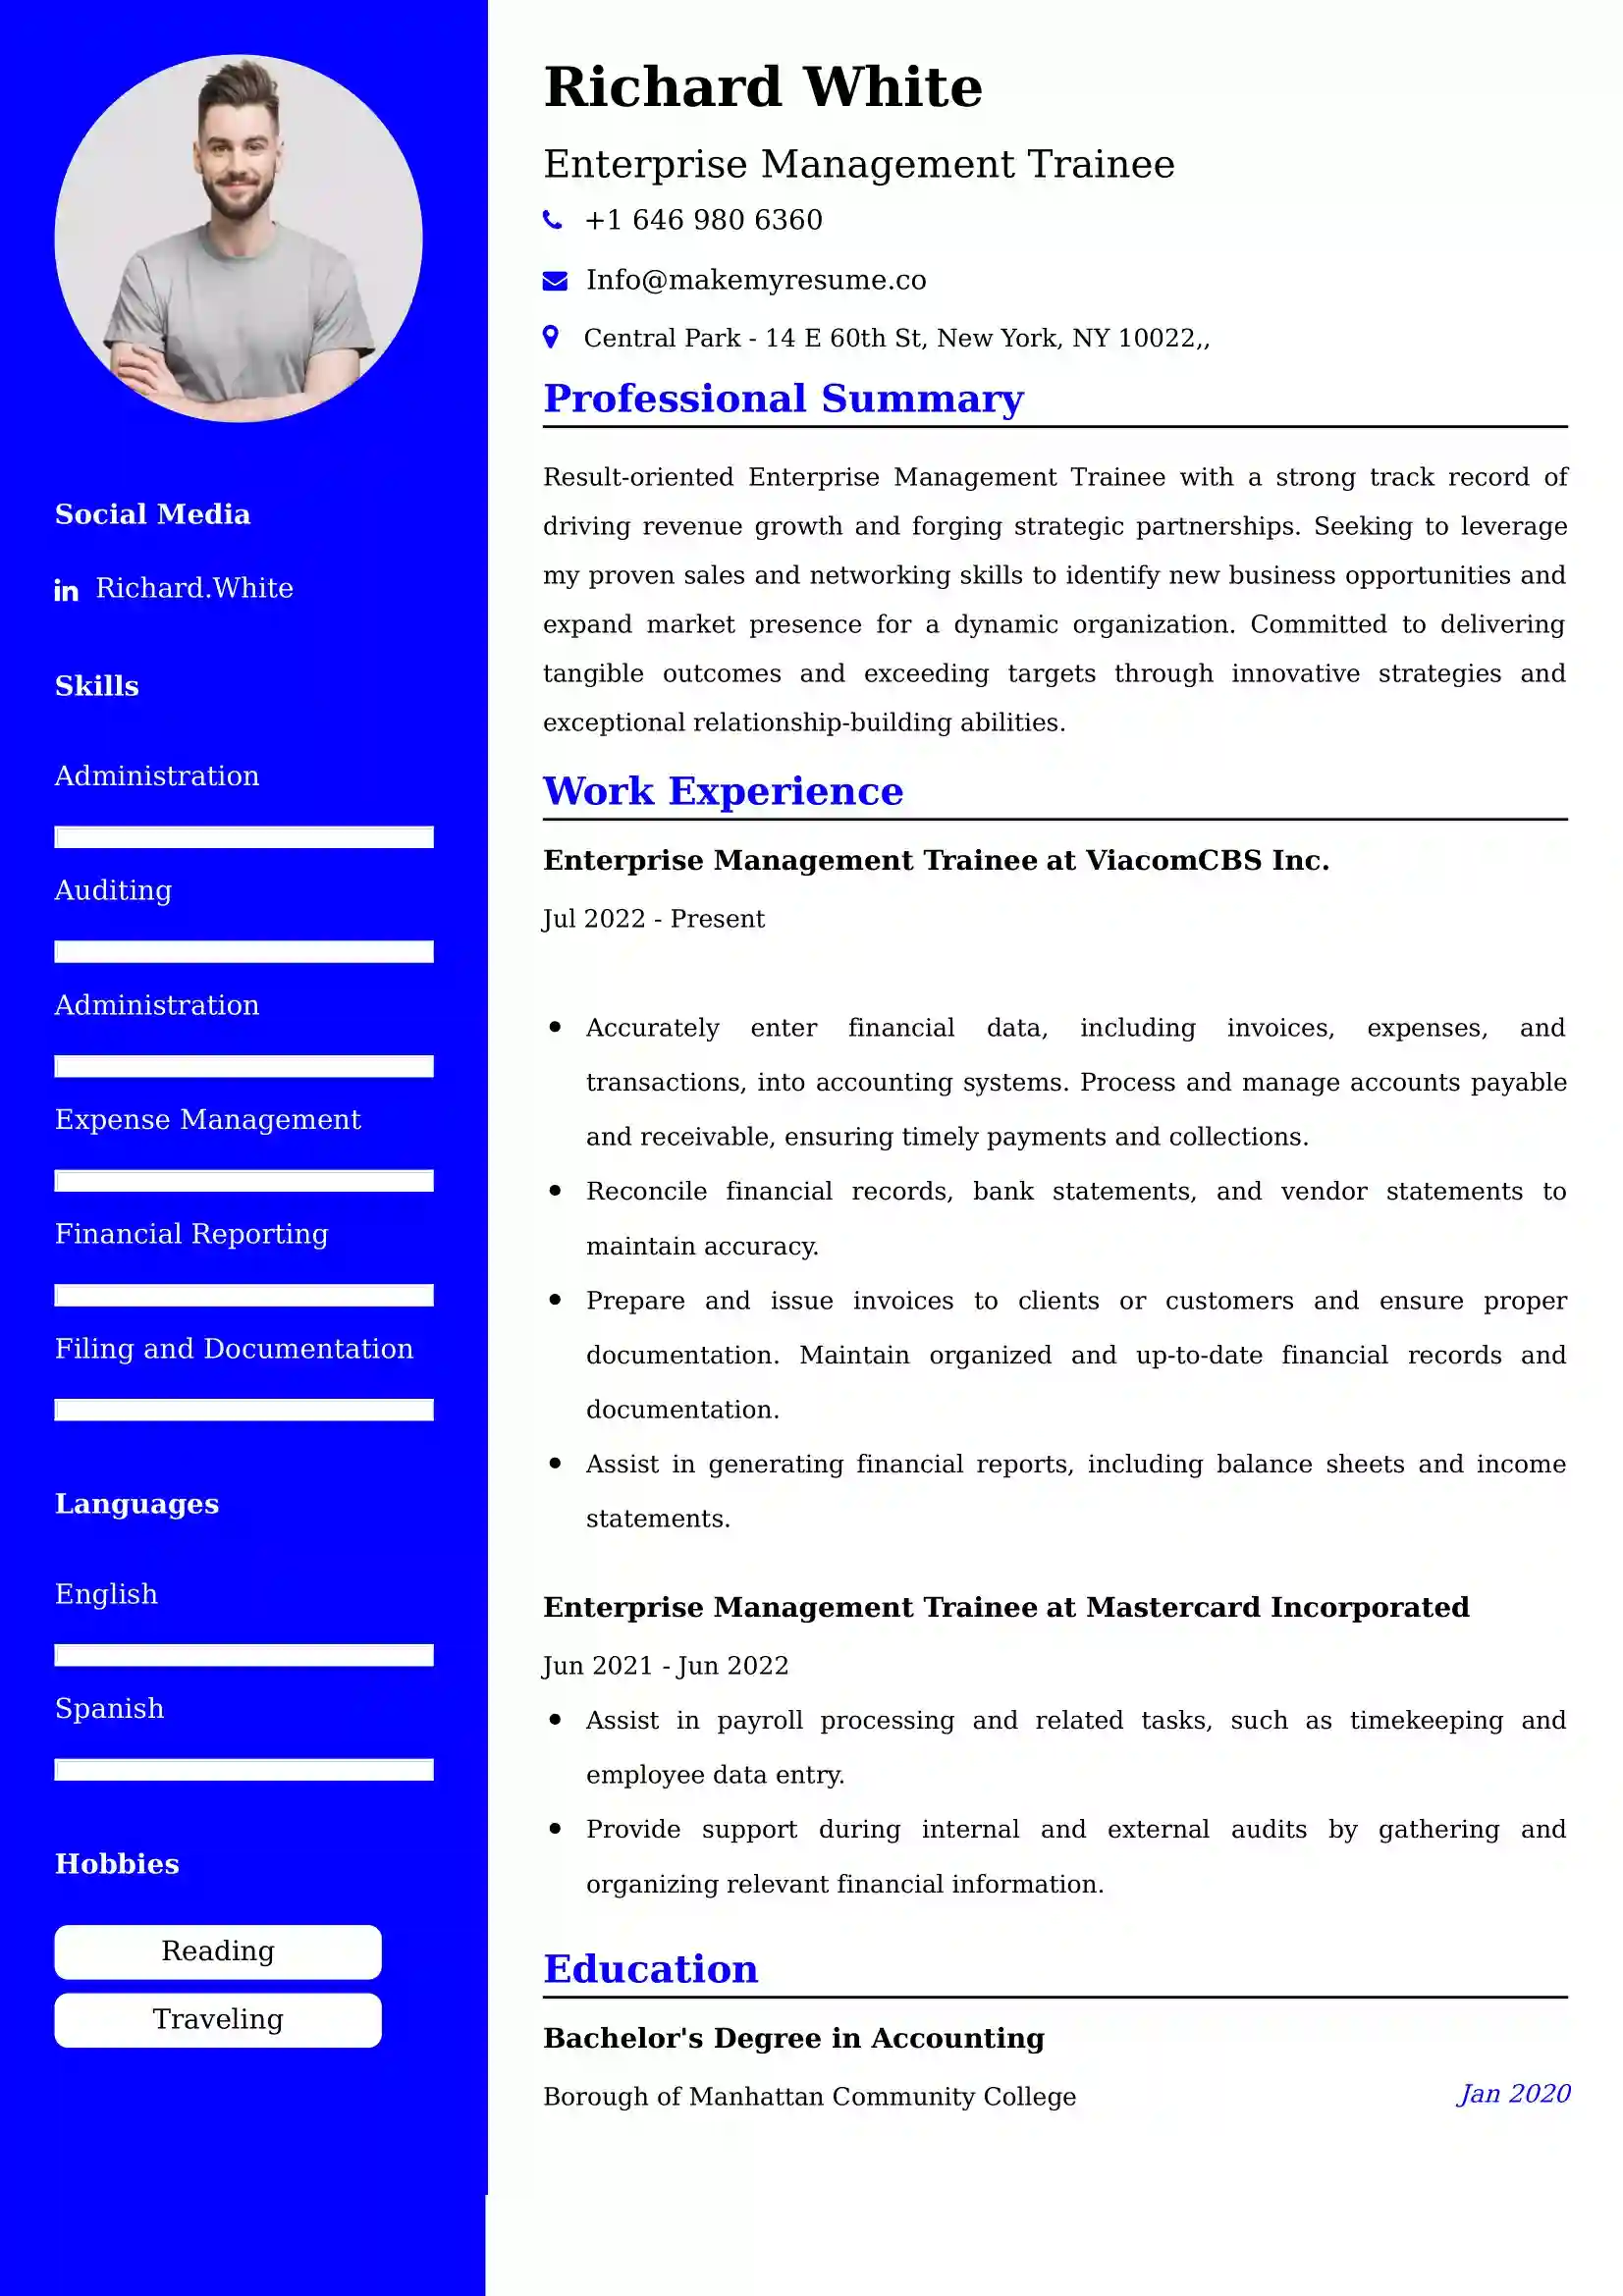 Enterprise Management Trainee CV Examples Malaysia